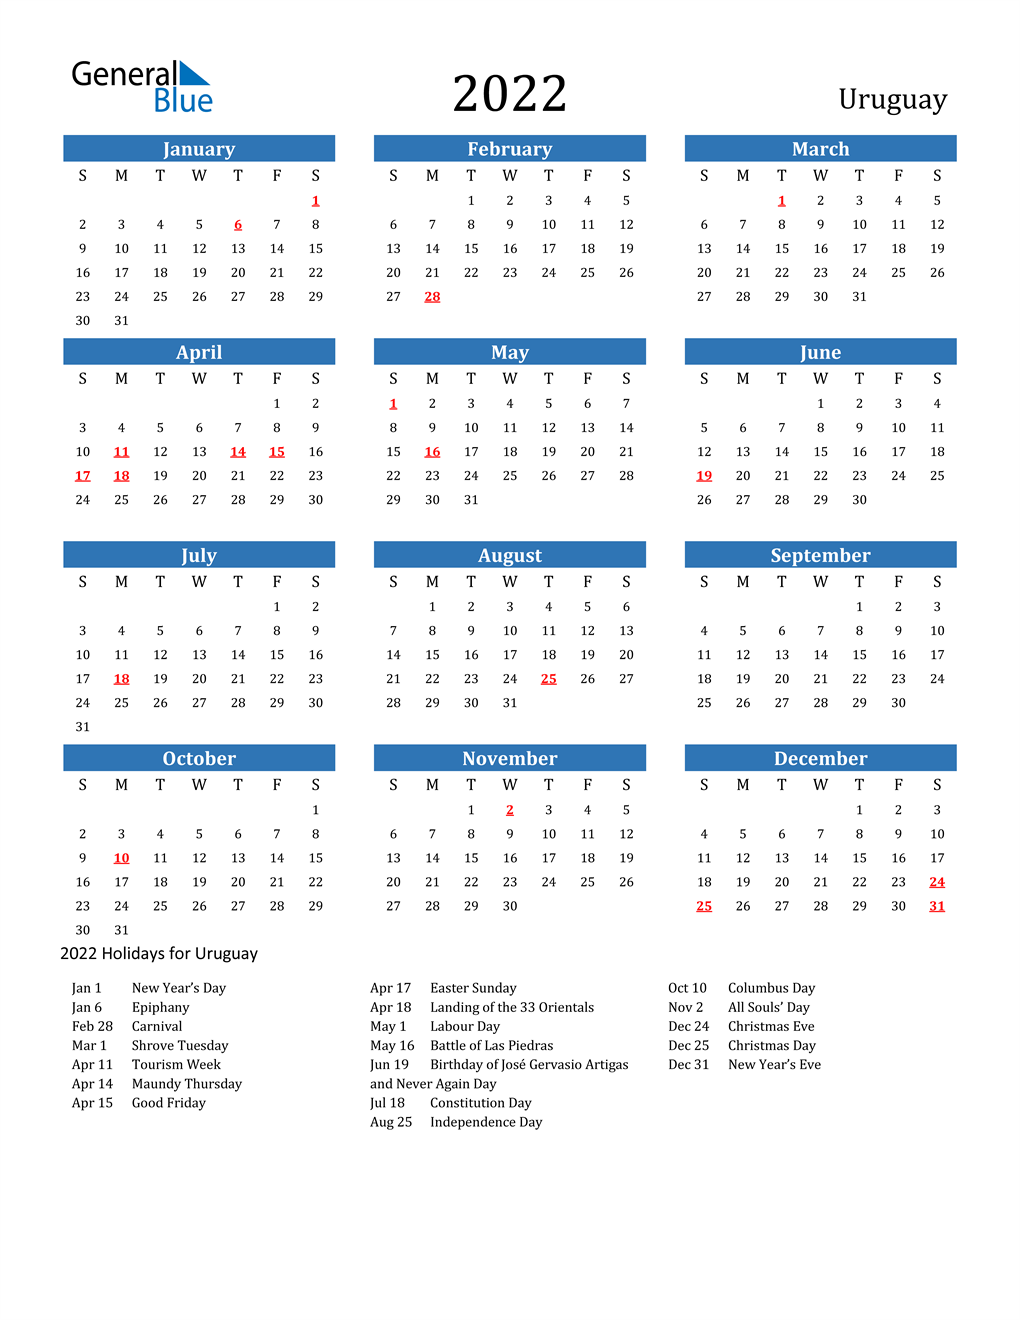 2022 Uruguay Calendar with Holidays